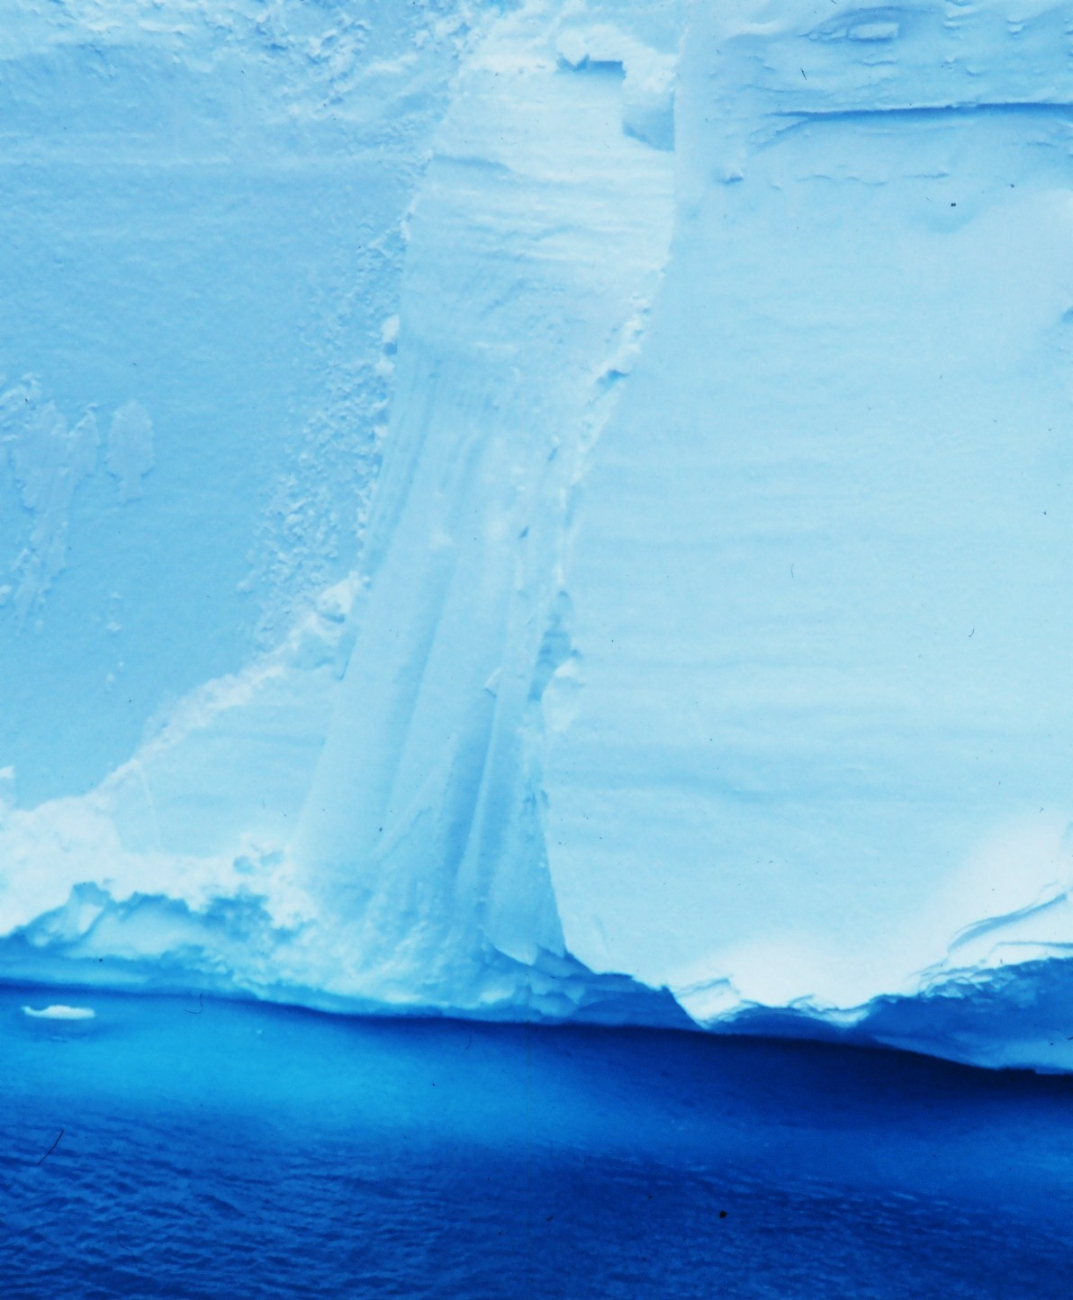 The seaward edge of the floating Ross Ice Shelf